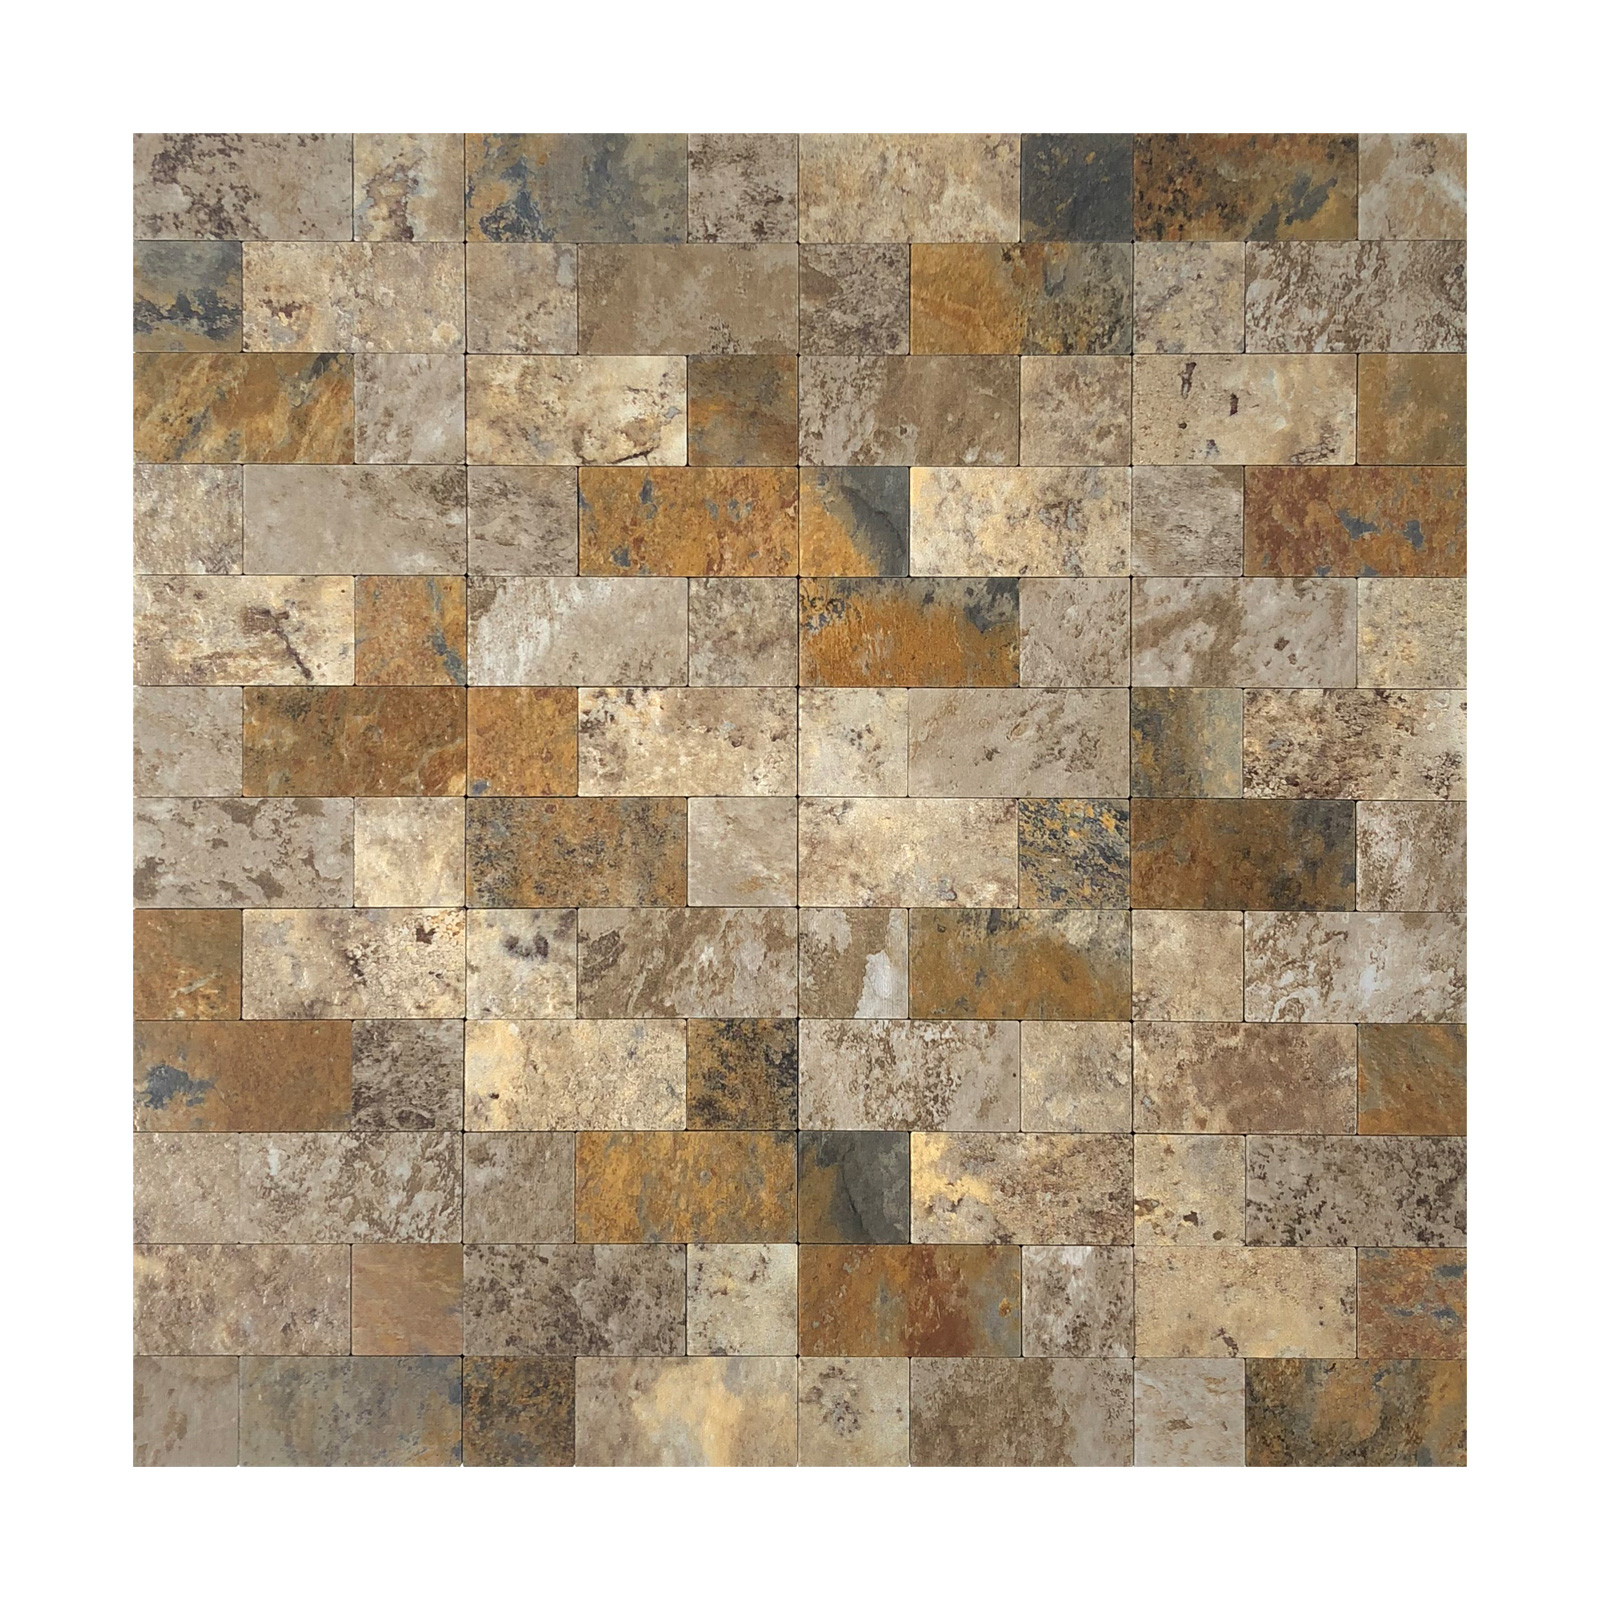 Art3d 12"x12" Peel and Stick Backsplash Tile for Kitchen, Faux Stone